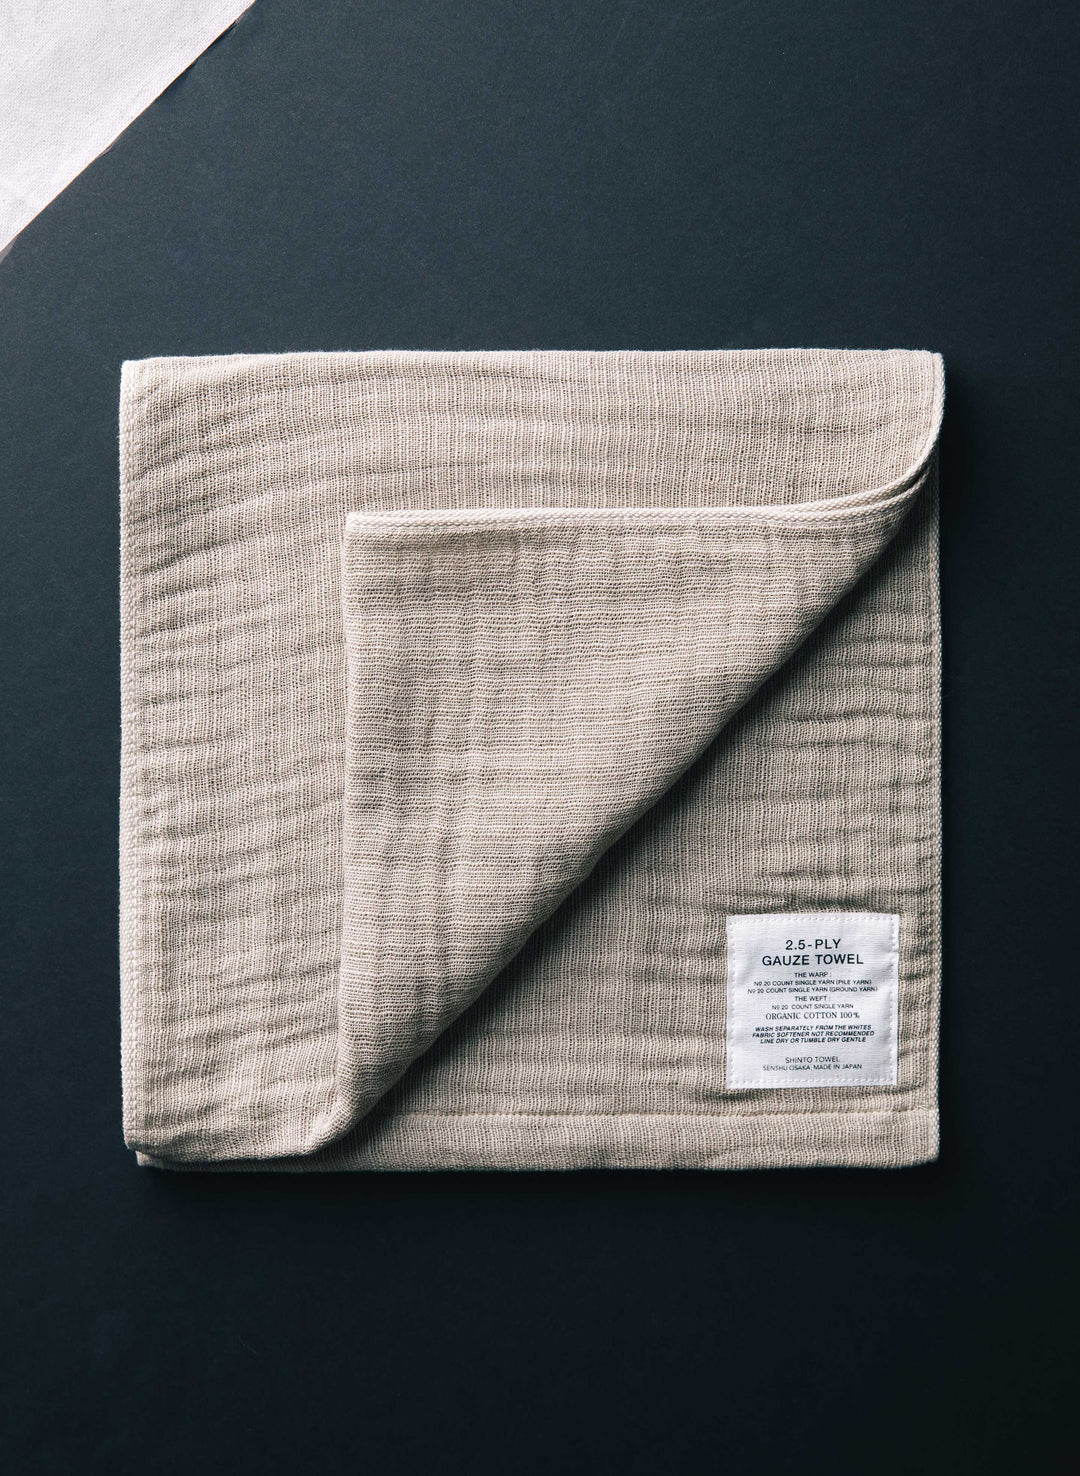 a folded towel on a black surface